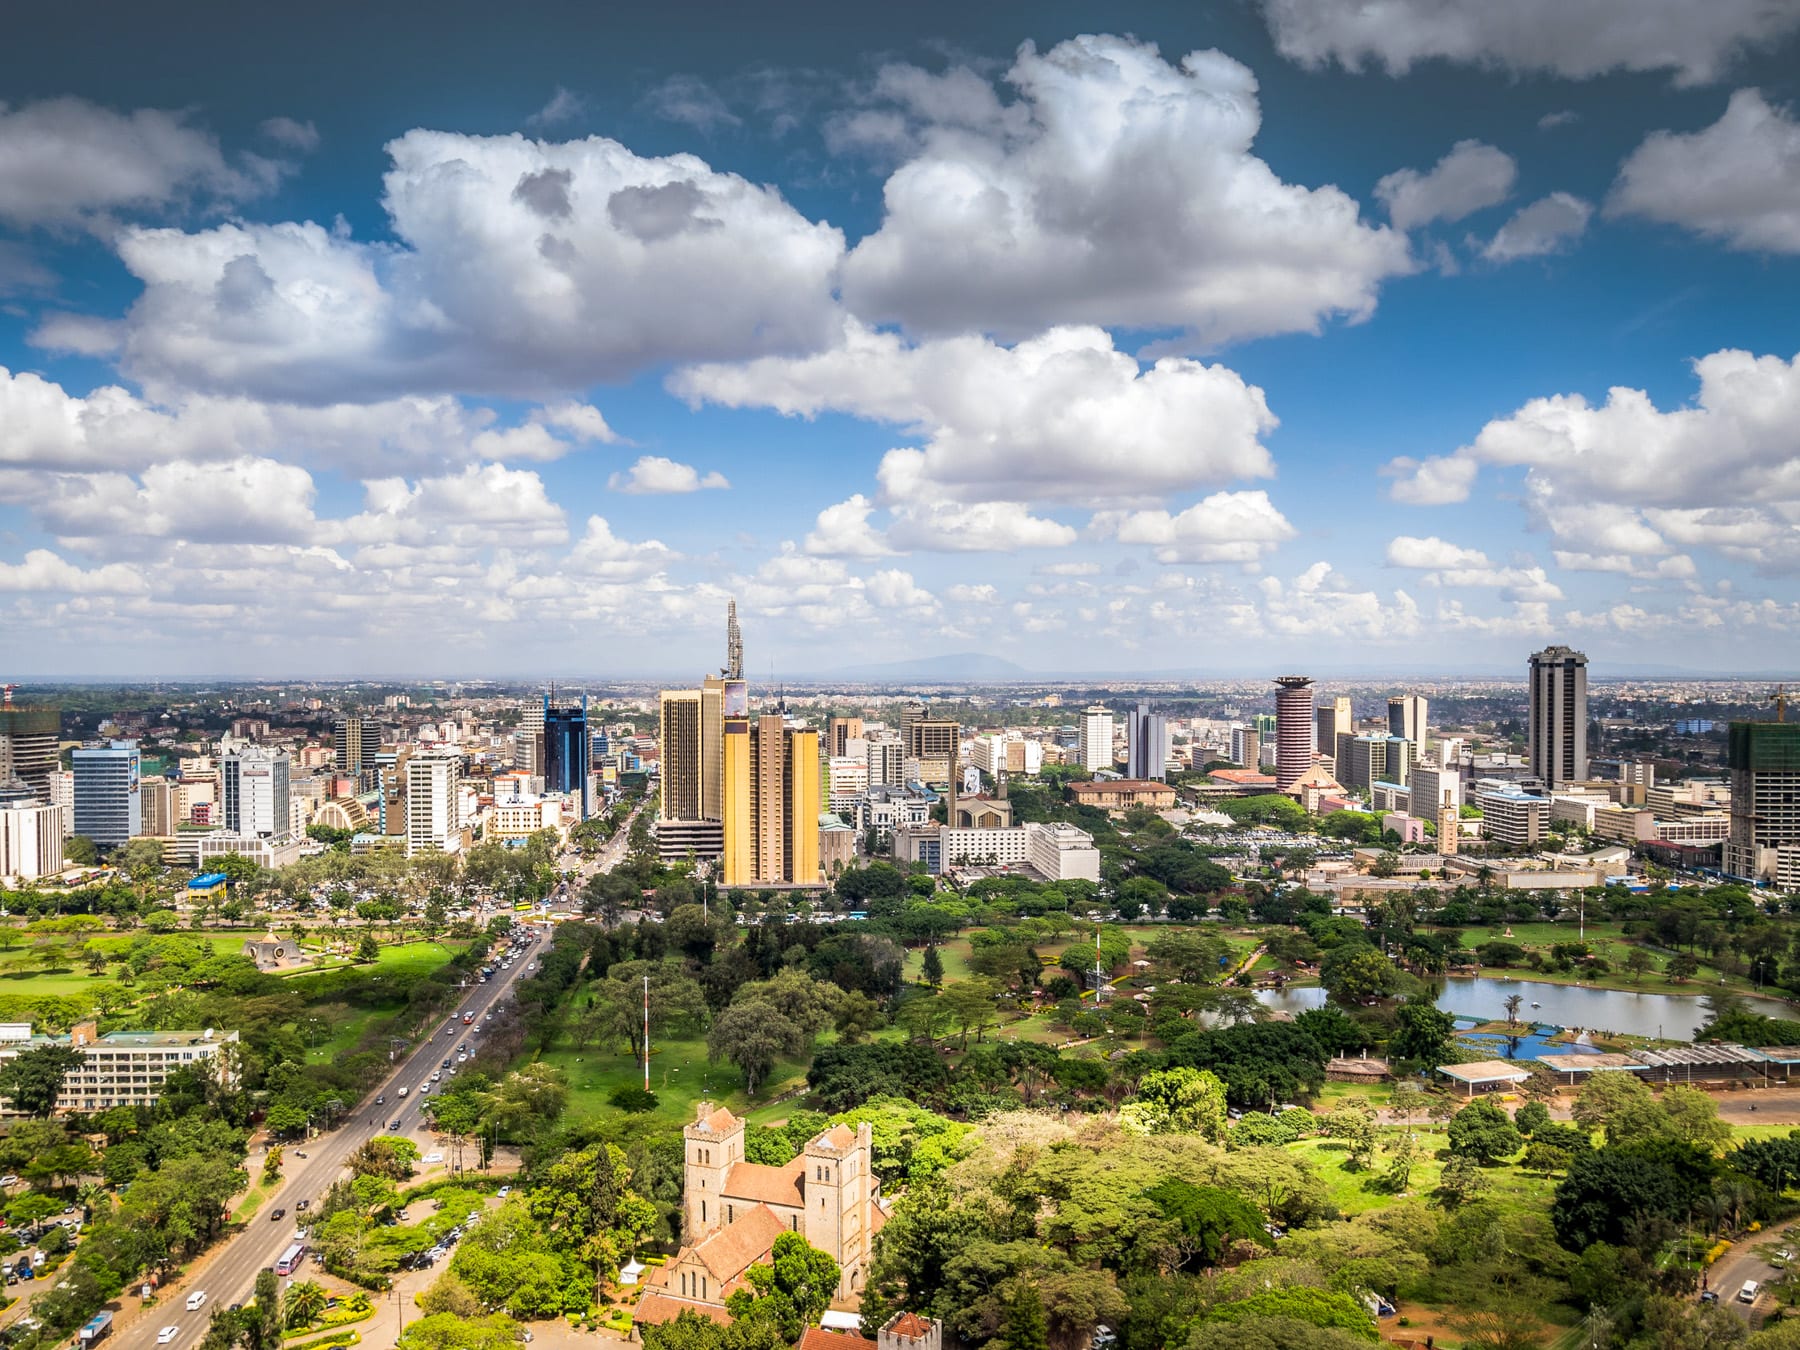 A view over Nairobi, the country’s capital. Image by Eunika Sopotnicka, 123rf.com.